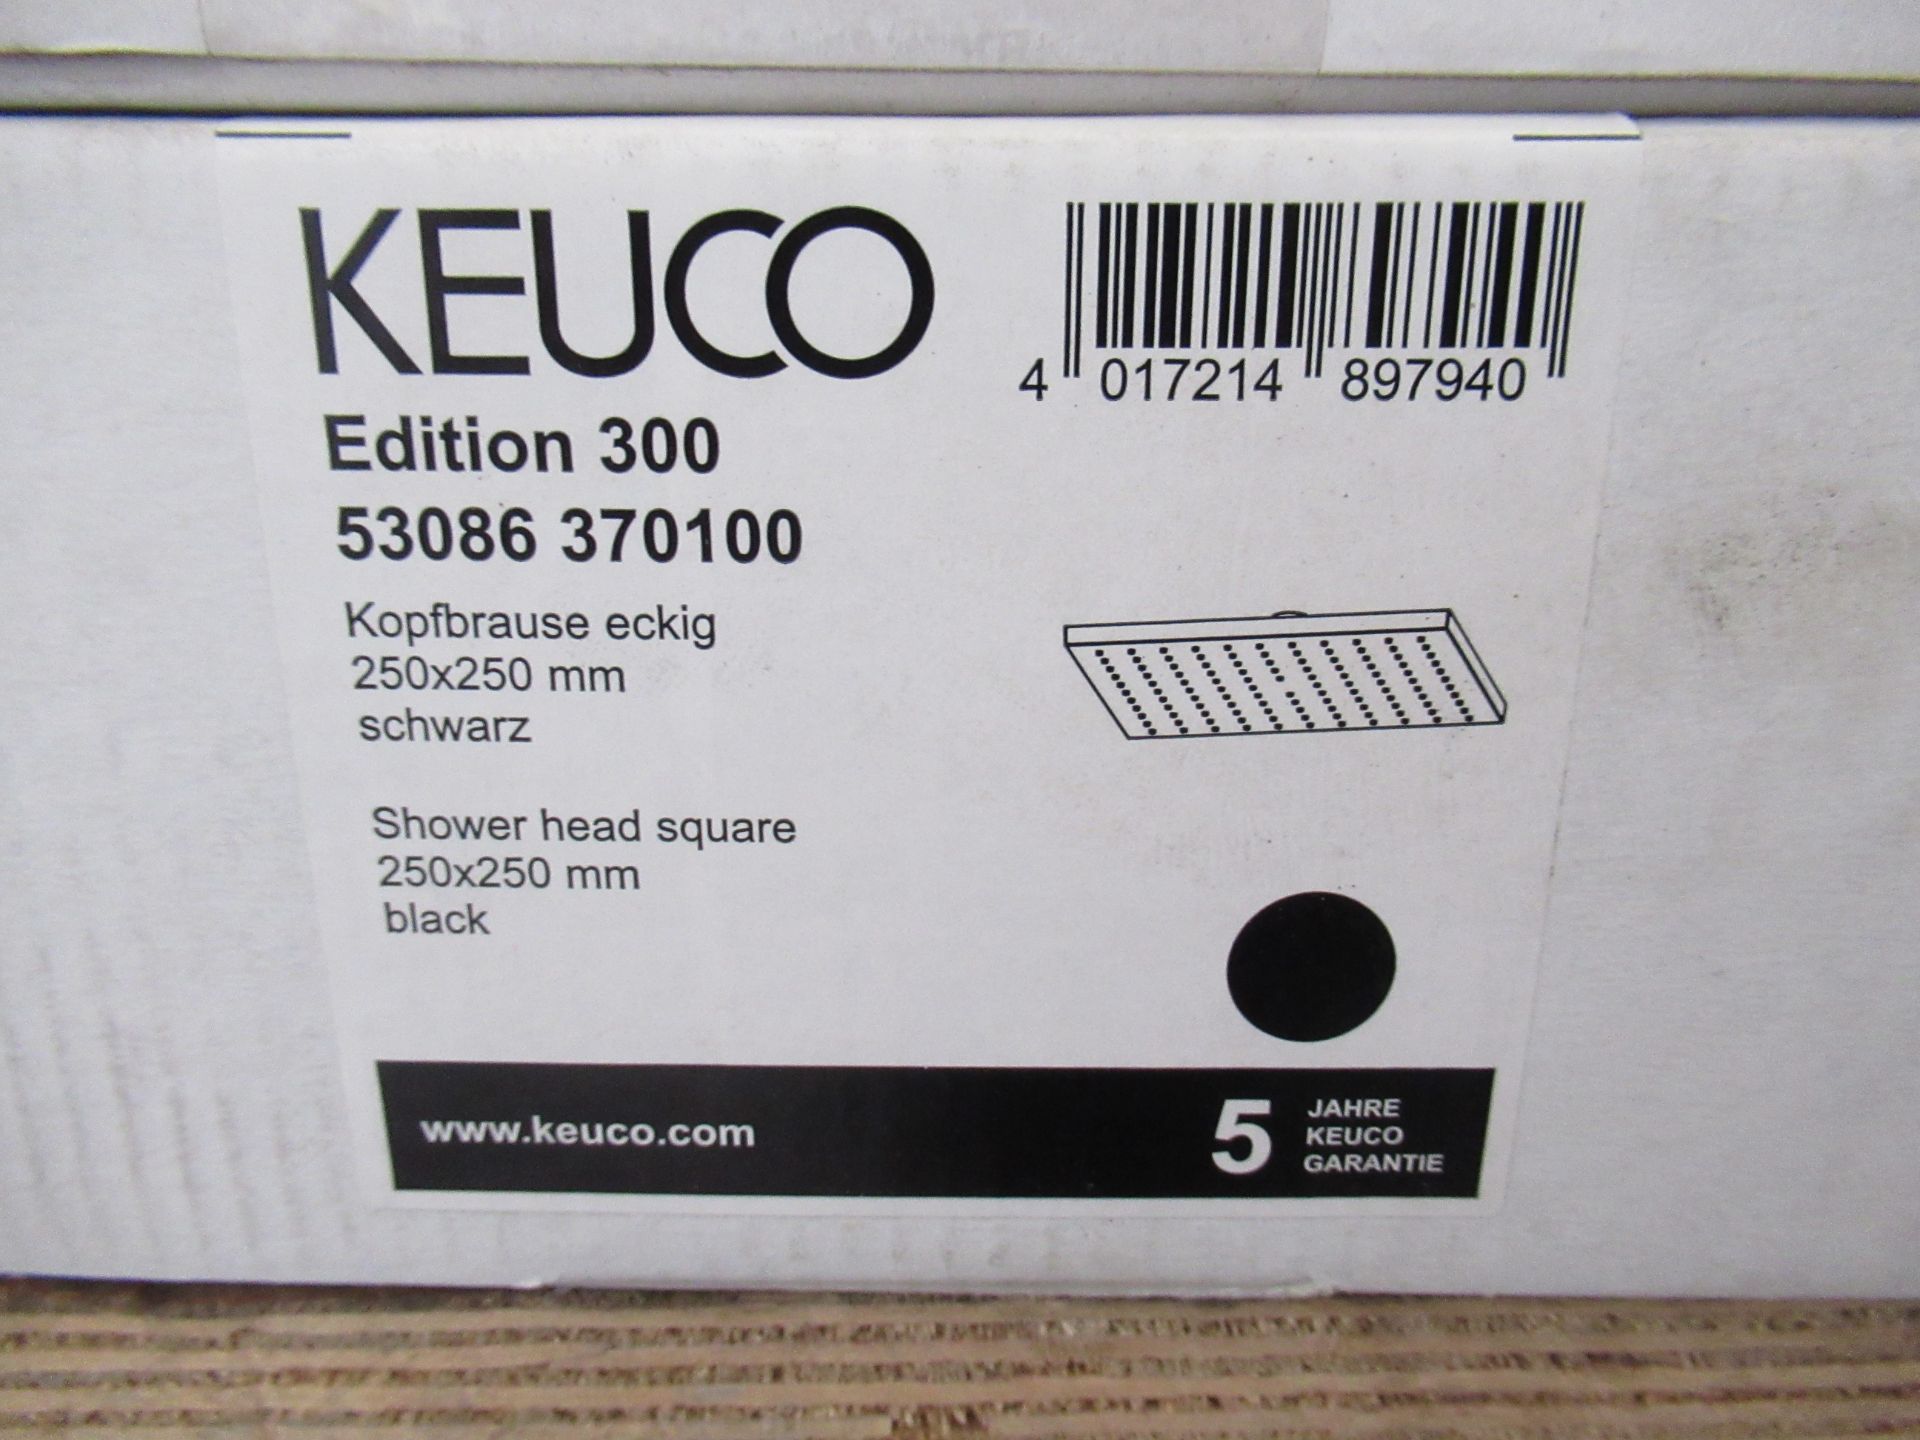 A Keuco Edition 300 Shower Head Square Black, P/N 53086-370100